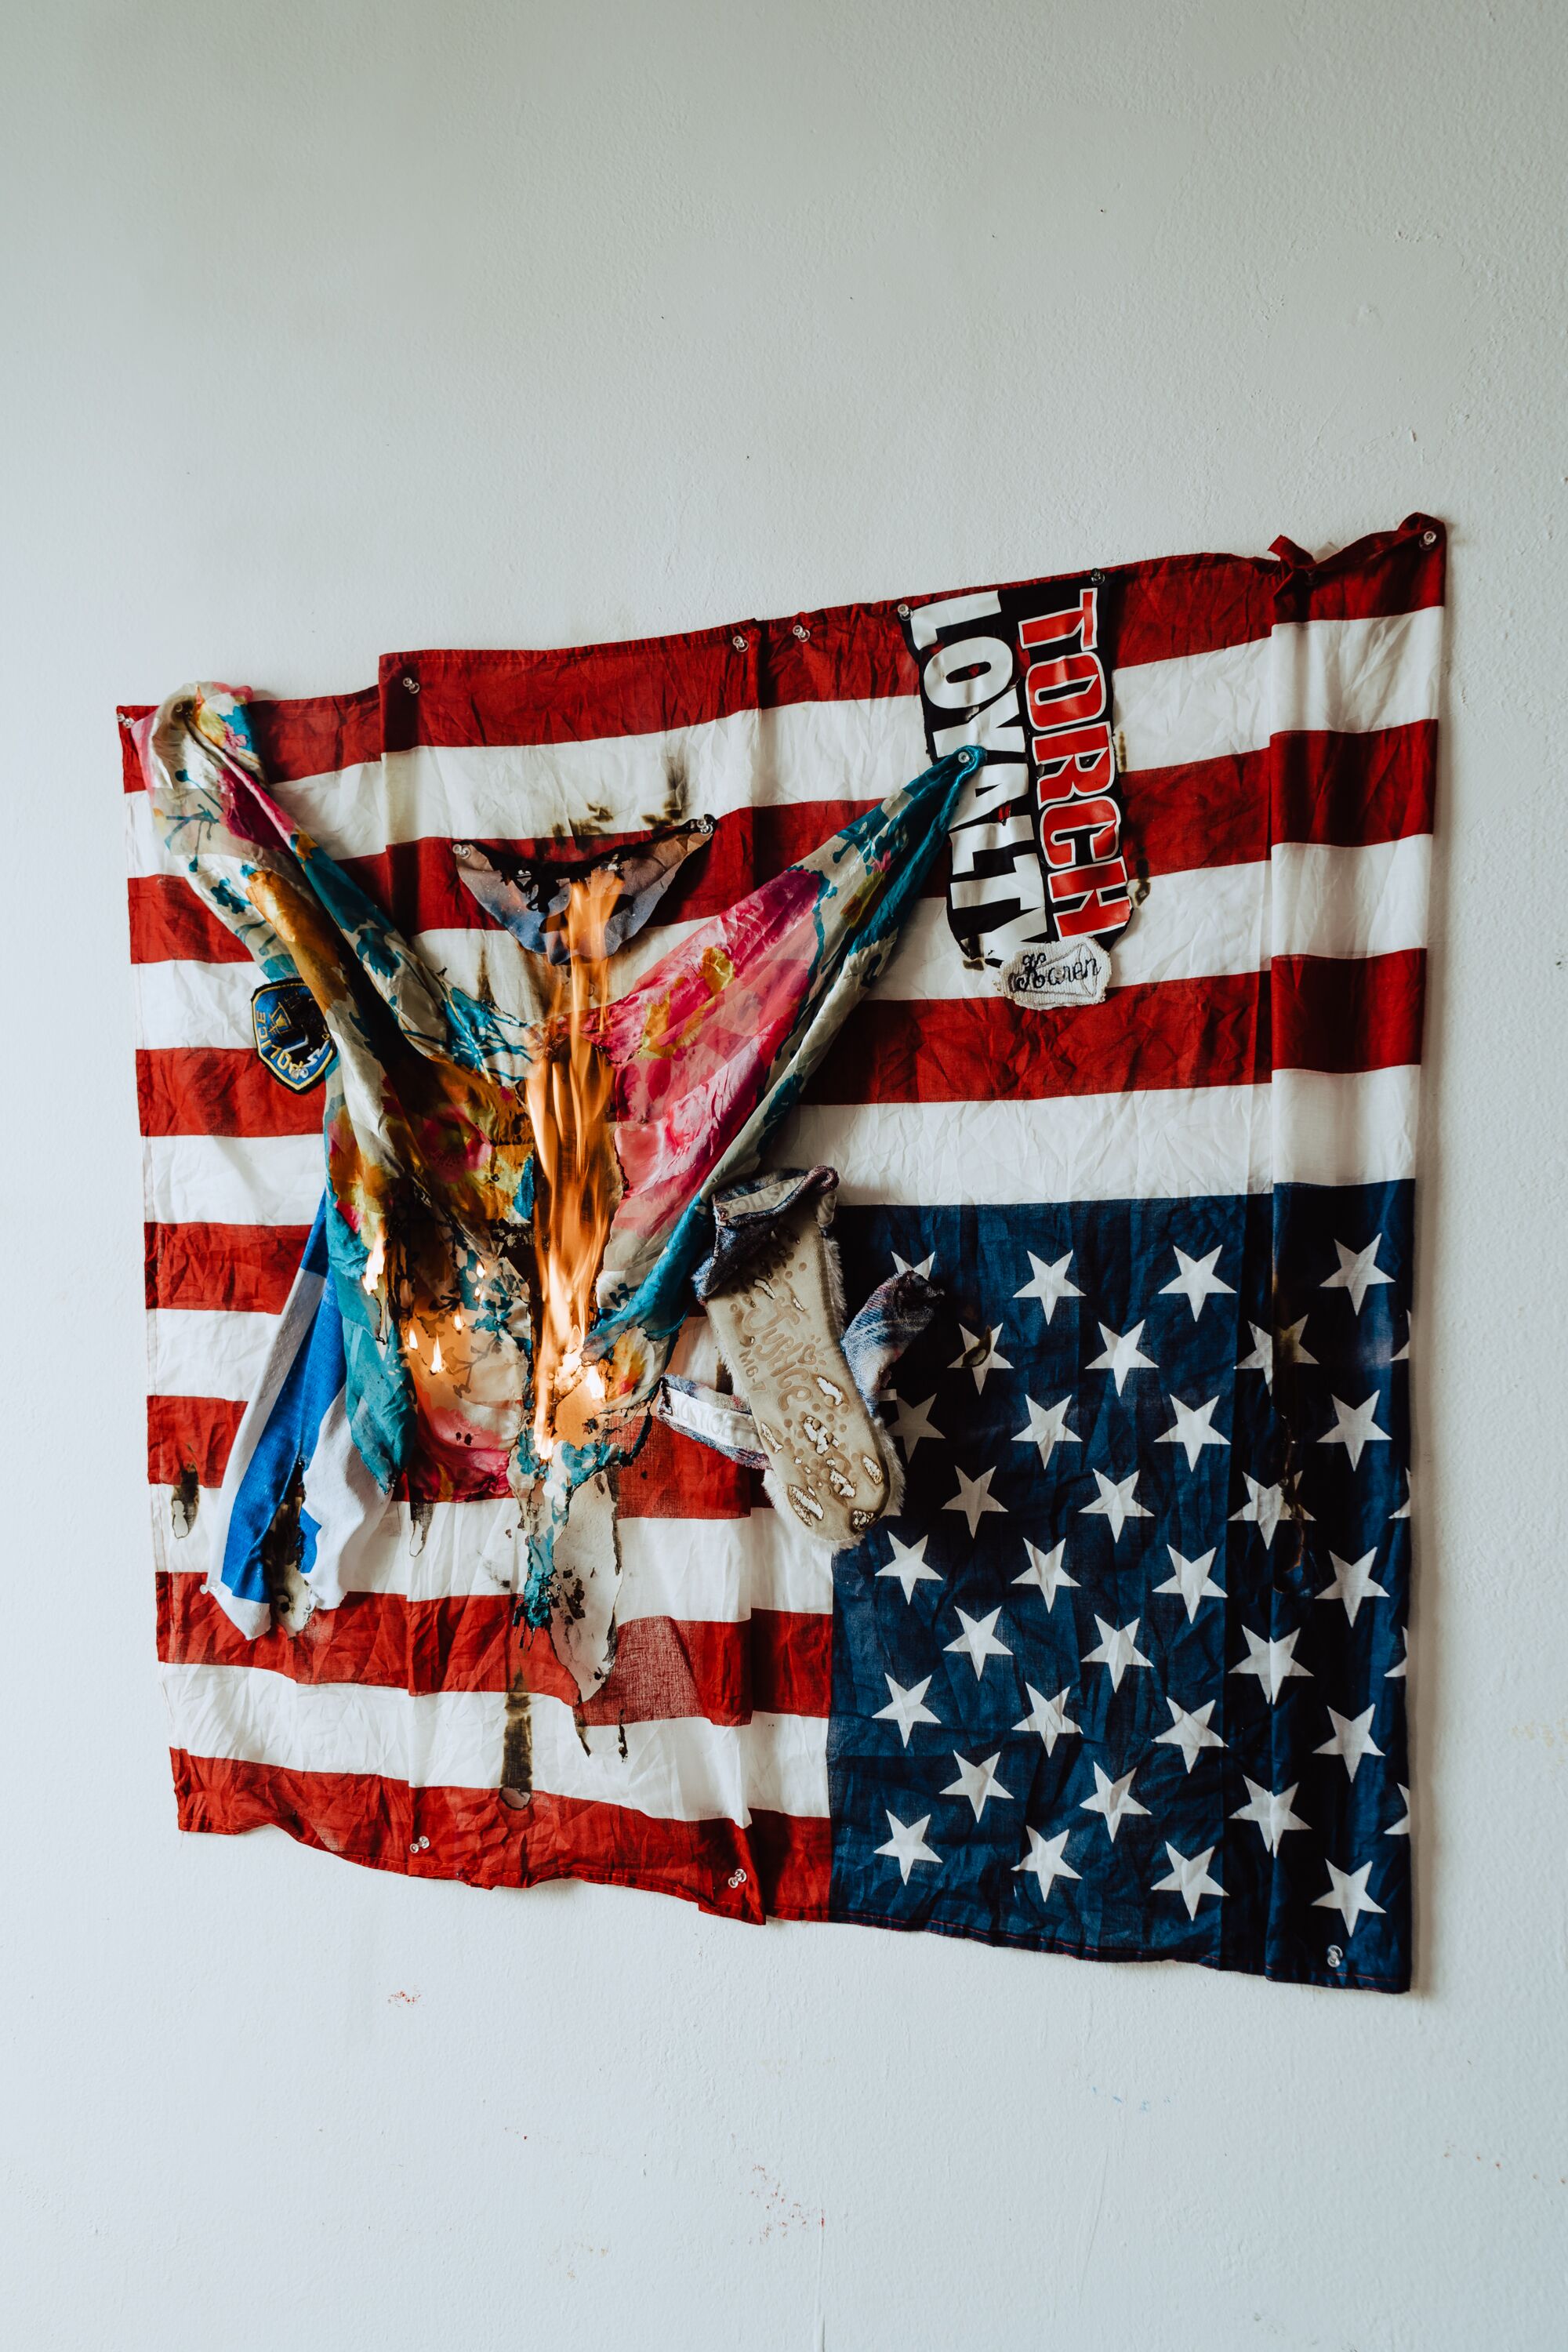 Muna Malik Recycled Democracy Found materials collage 37 x 35 U.S Flag, slipper, t-shirt, police patch